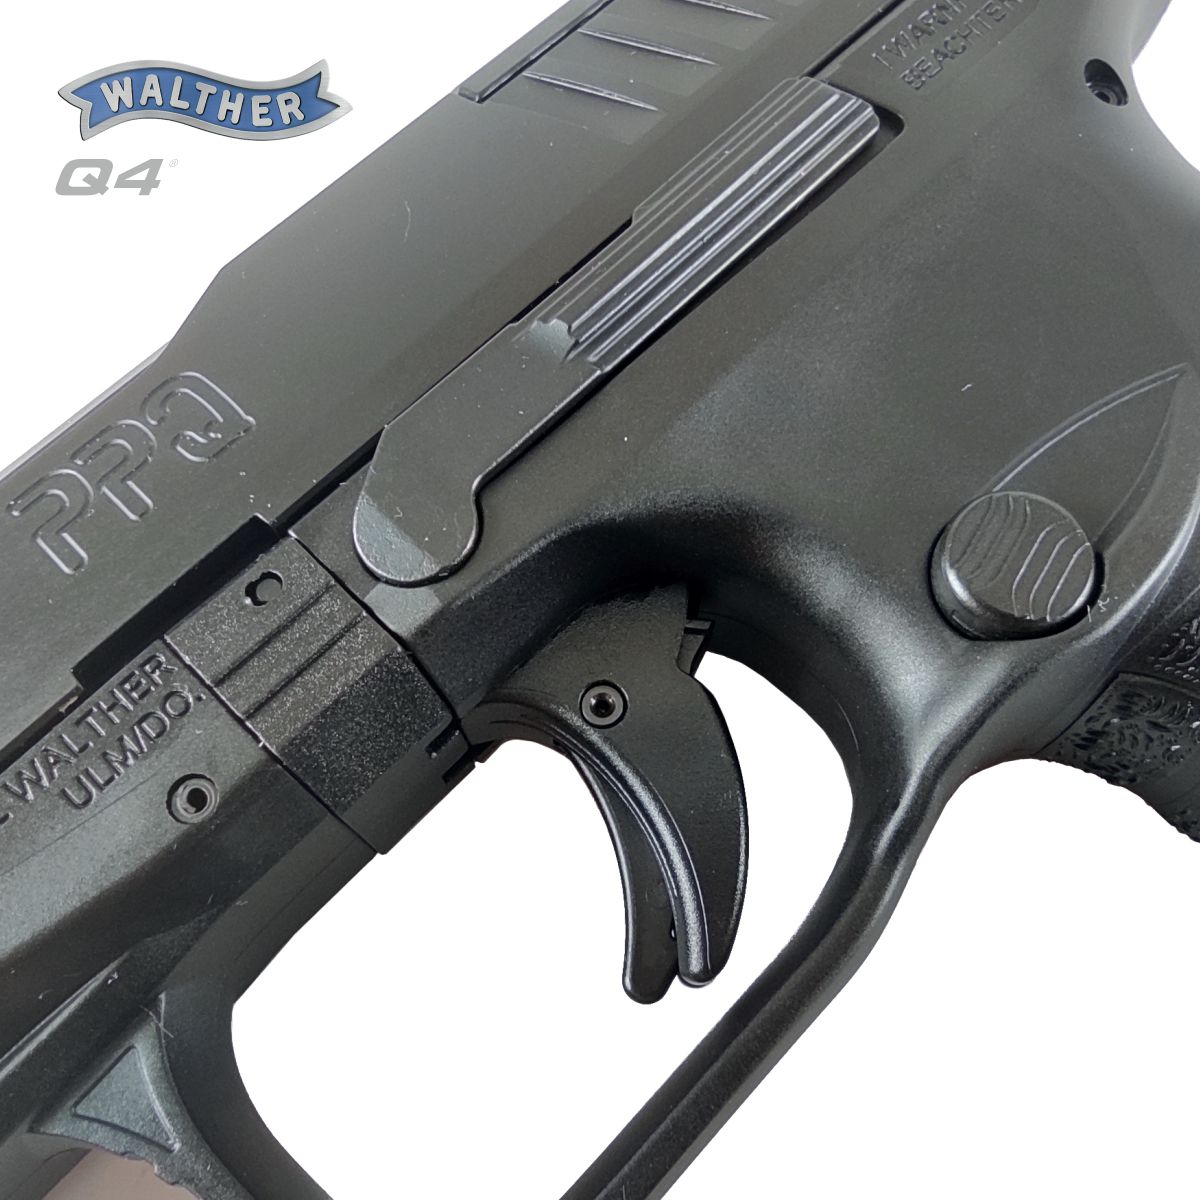 Walther PPQ Q4 4" 9 mm Luger, pistole samonabíjecí | Online shop www